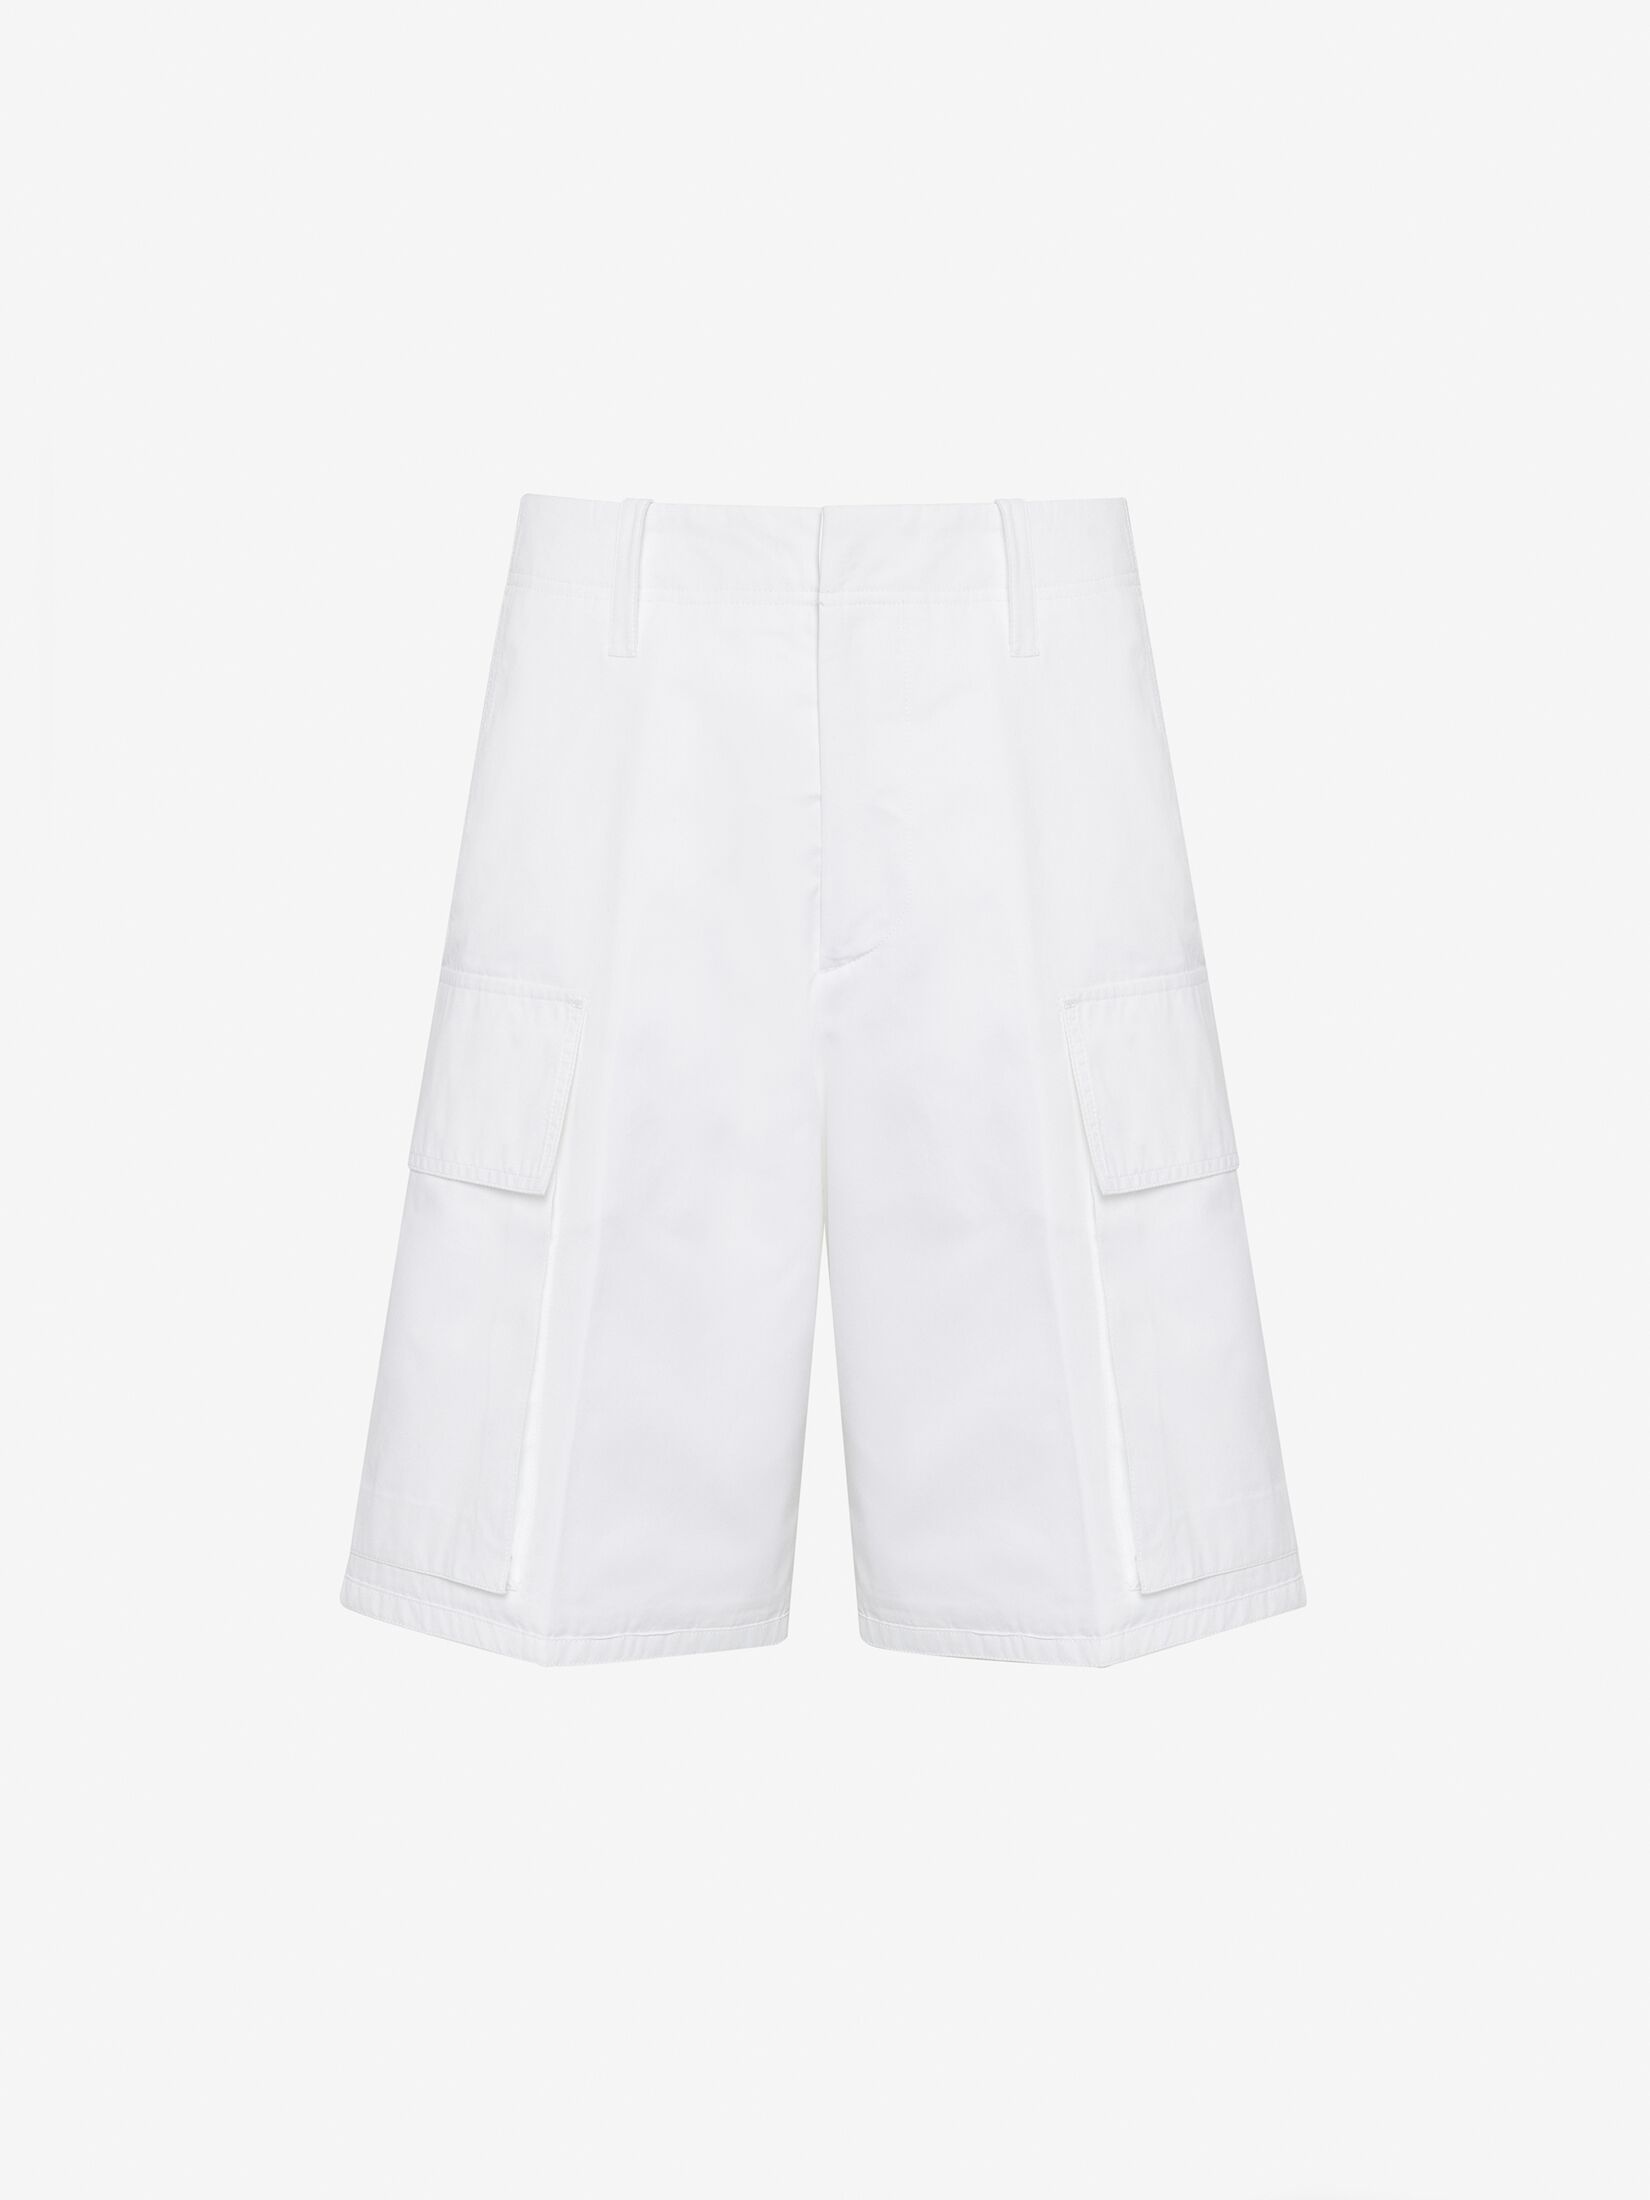 Men's Cargo Shorts in White - 1